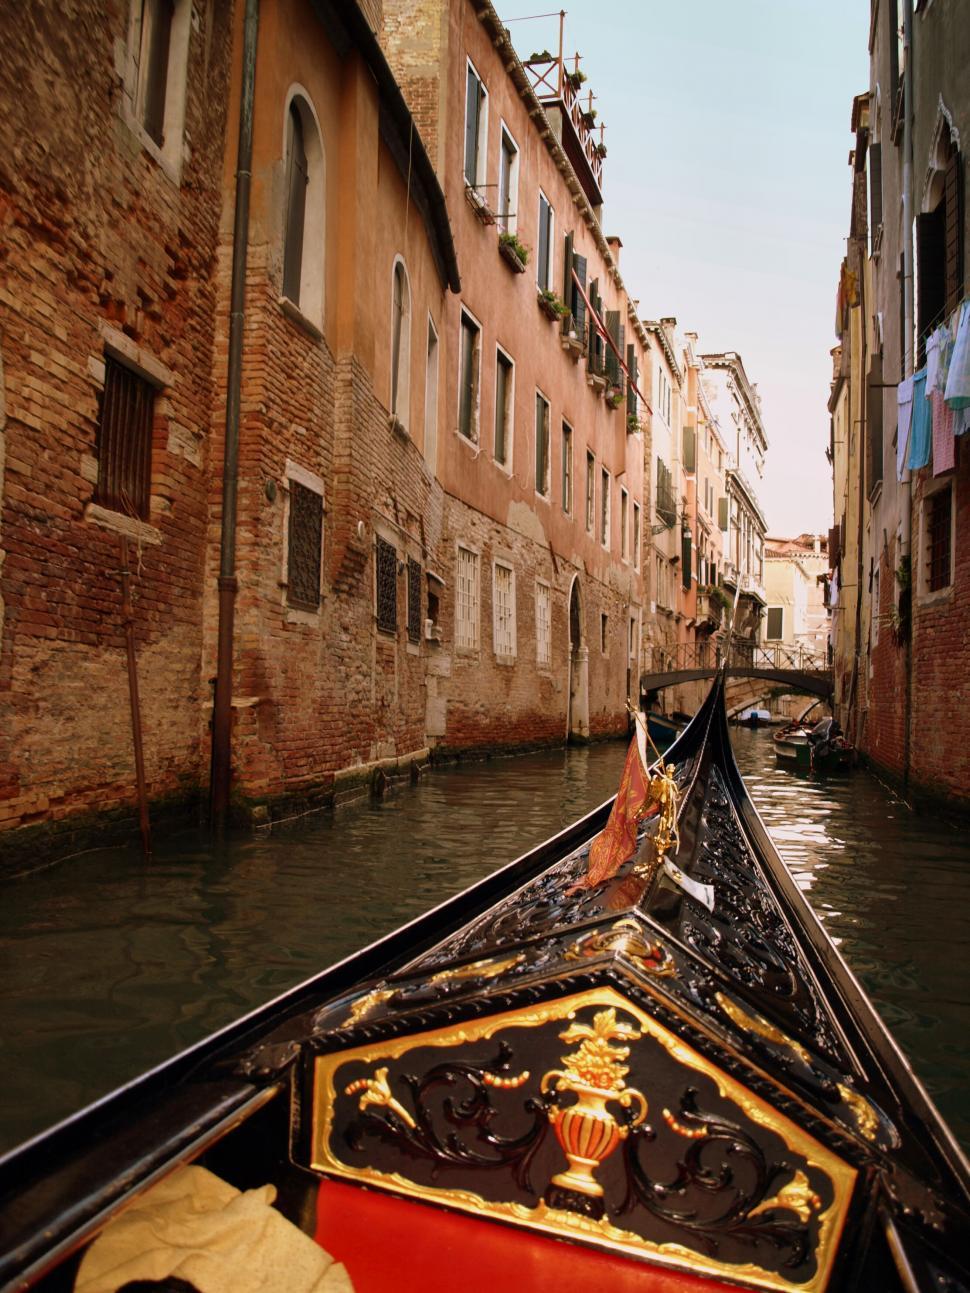 Free Image of Gondola ride through historic Venice canals 